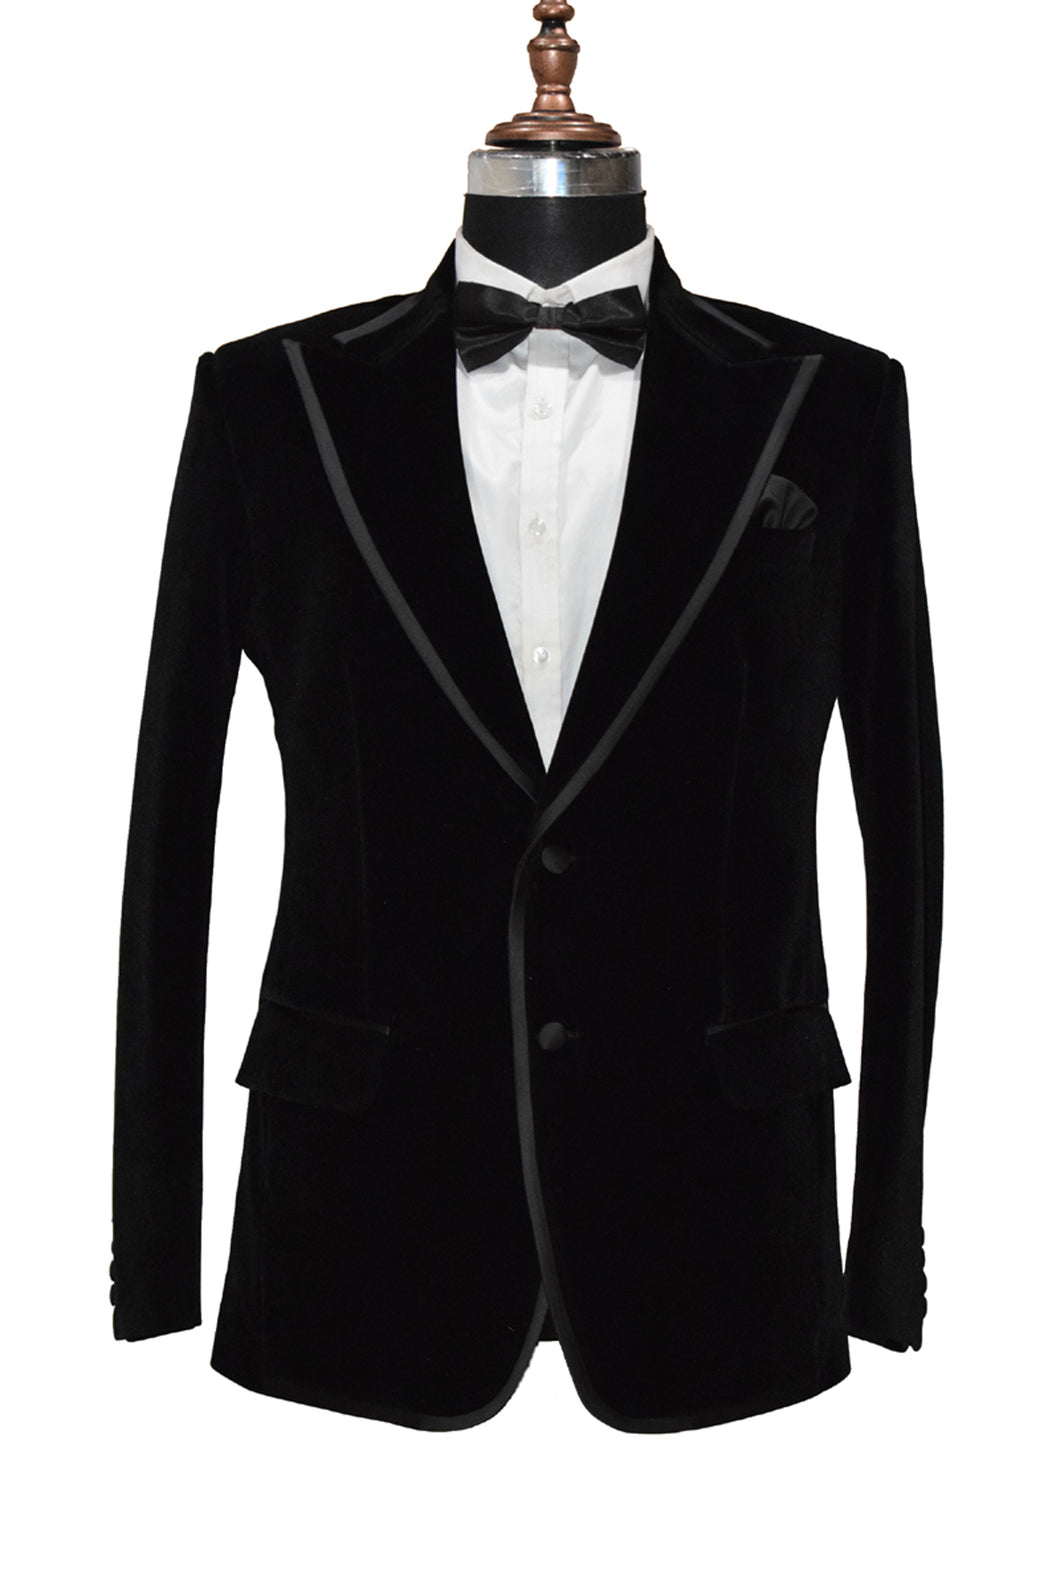 Men Black Smoking Jacket Dinner Party Wear Blazer Coat - TrendsfashionIN